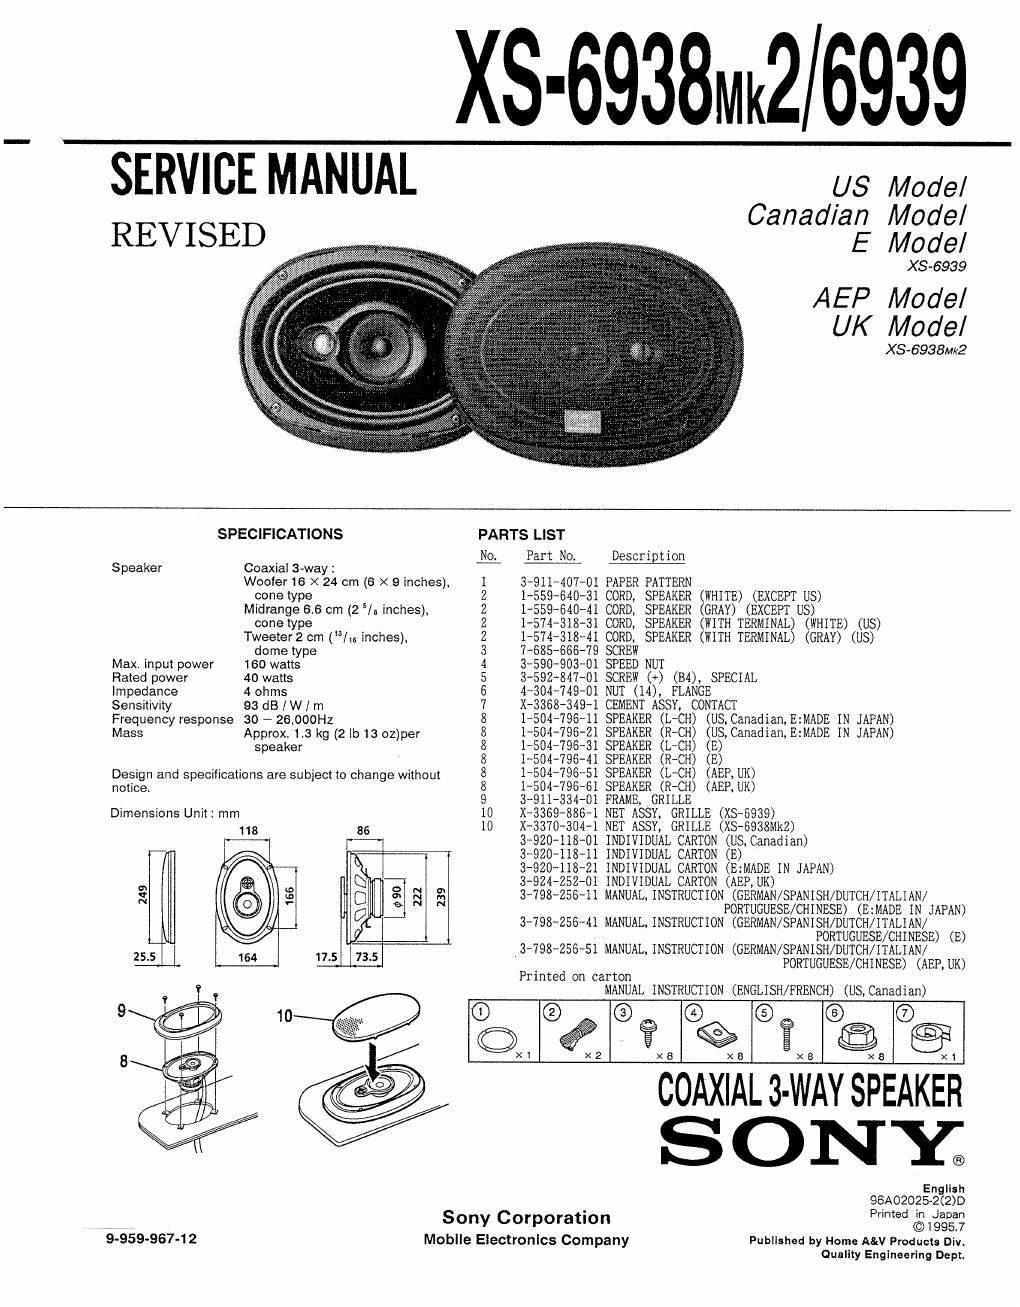 sony xs 6938 mk2 service manual